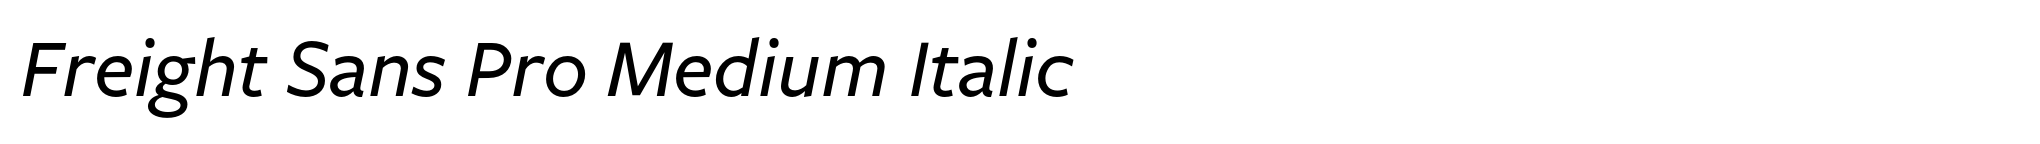 Freight Sans Pro Medium Italic image